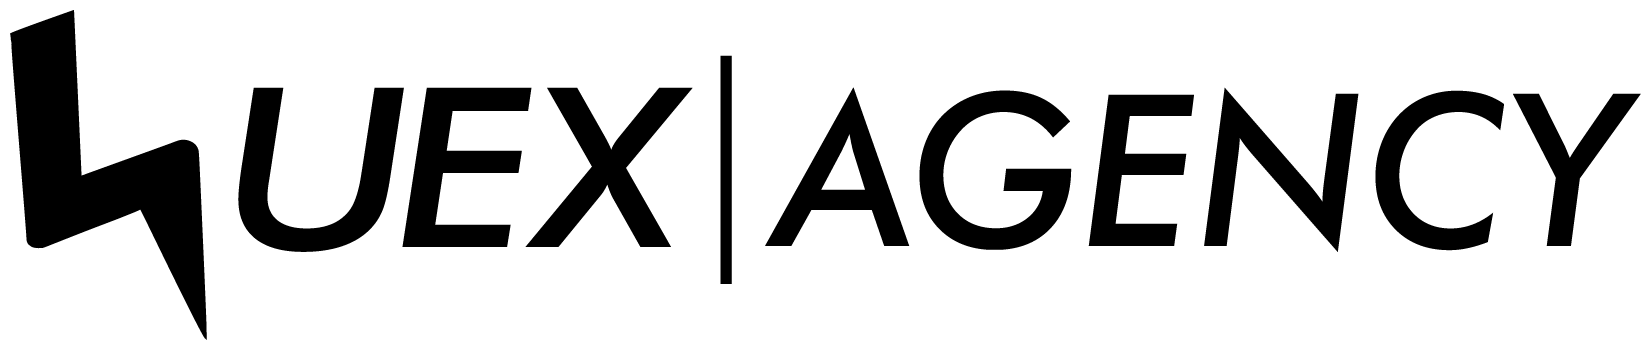 huex-logo-all-black-with-divider-line